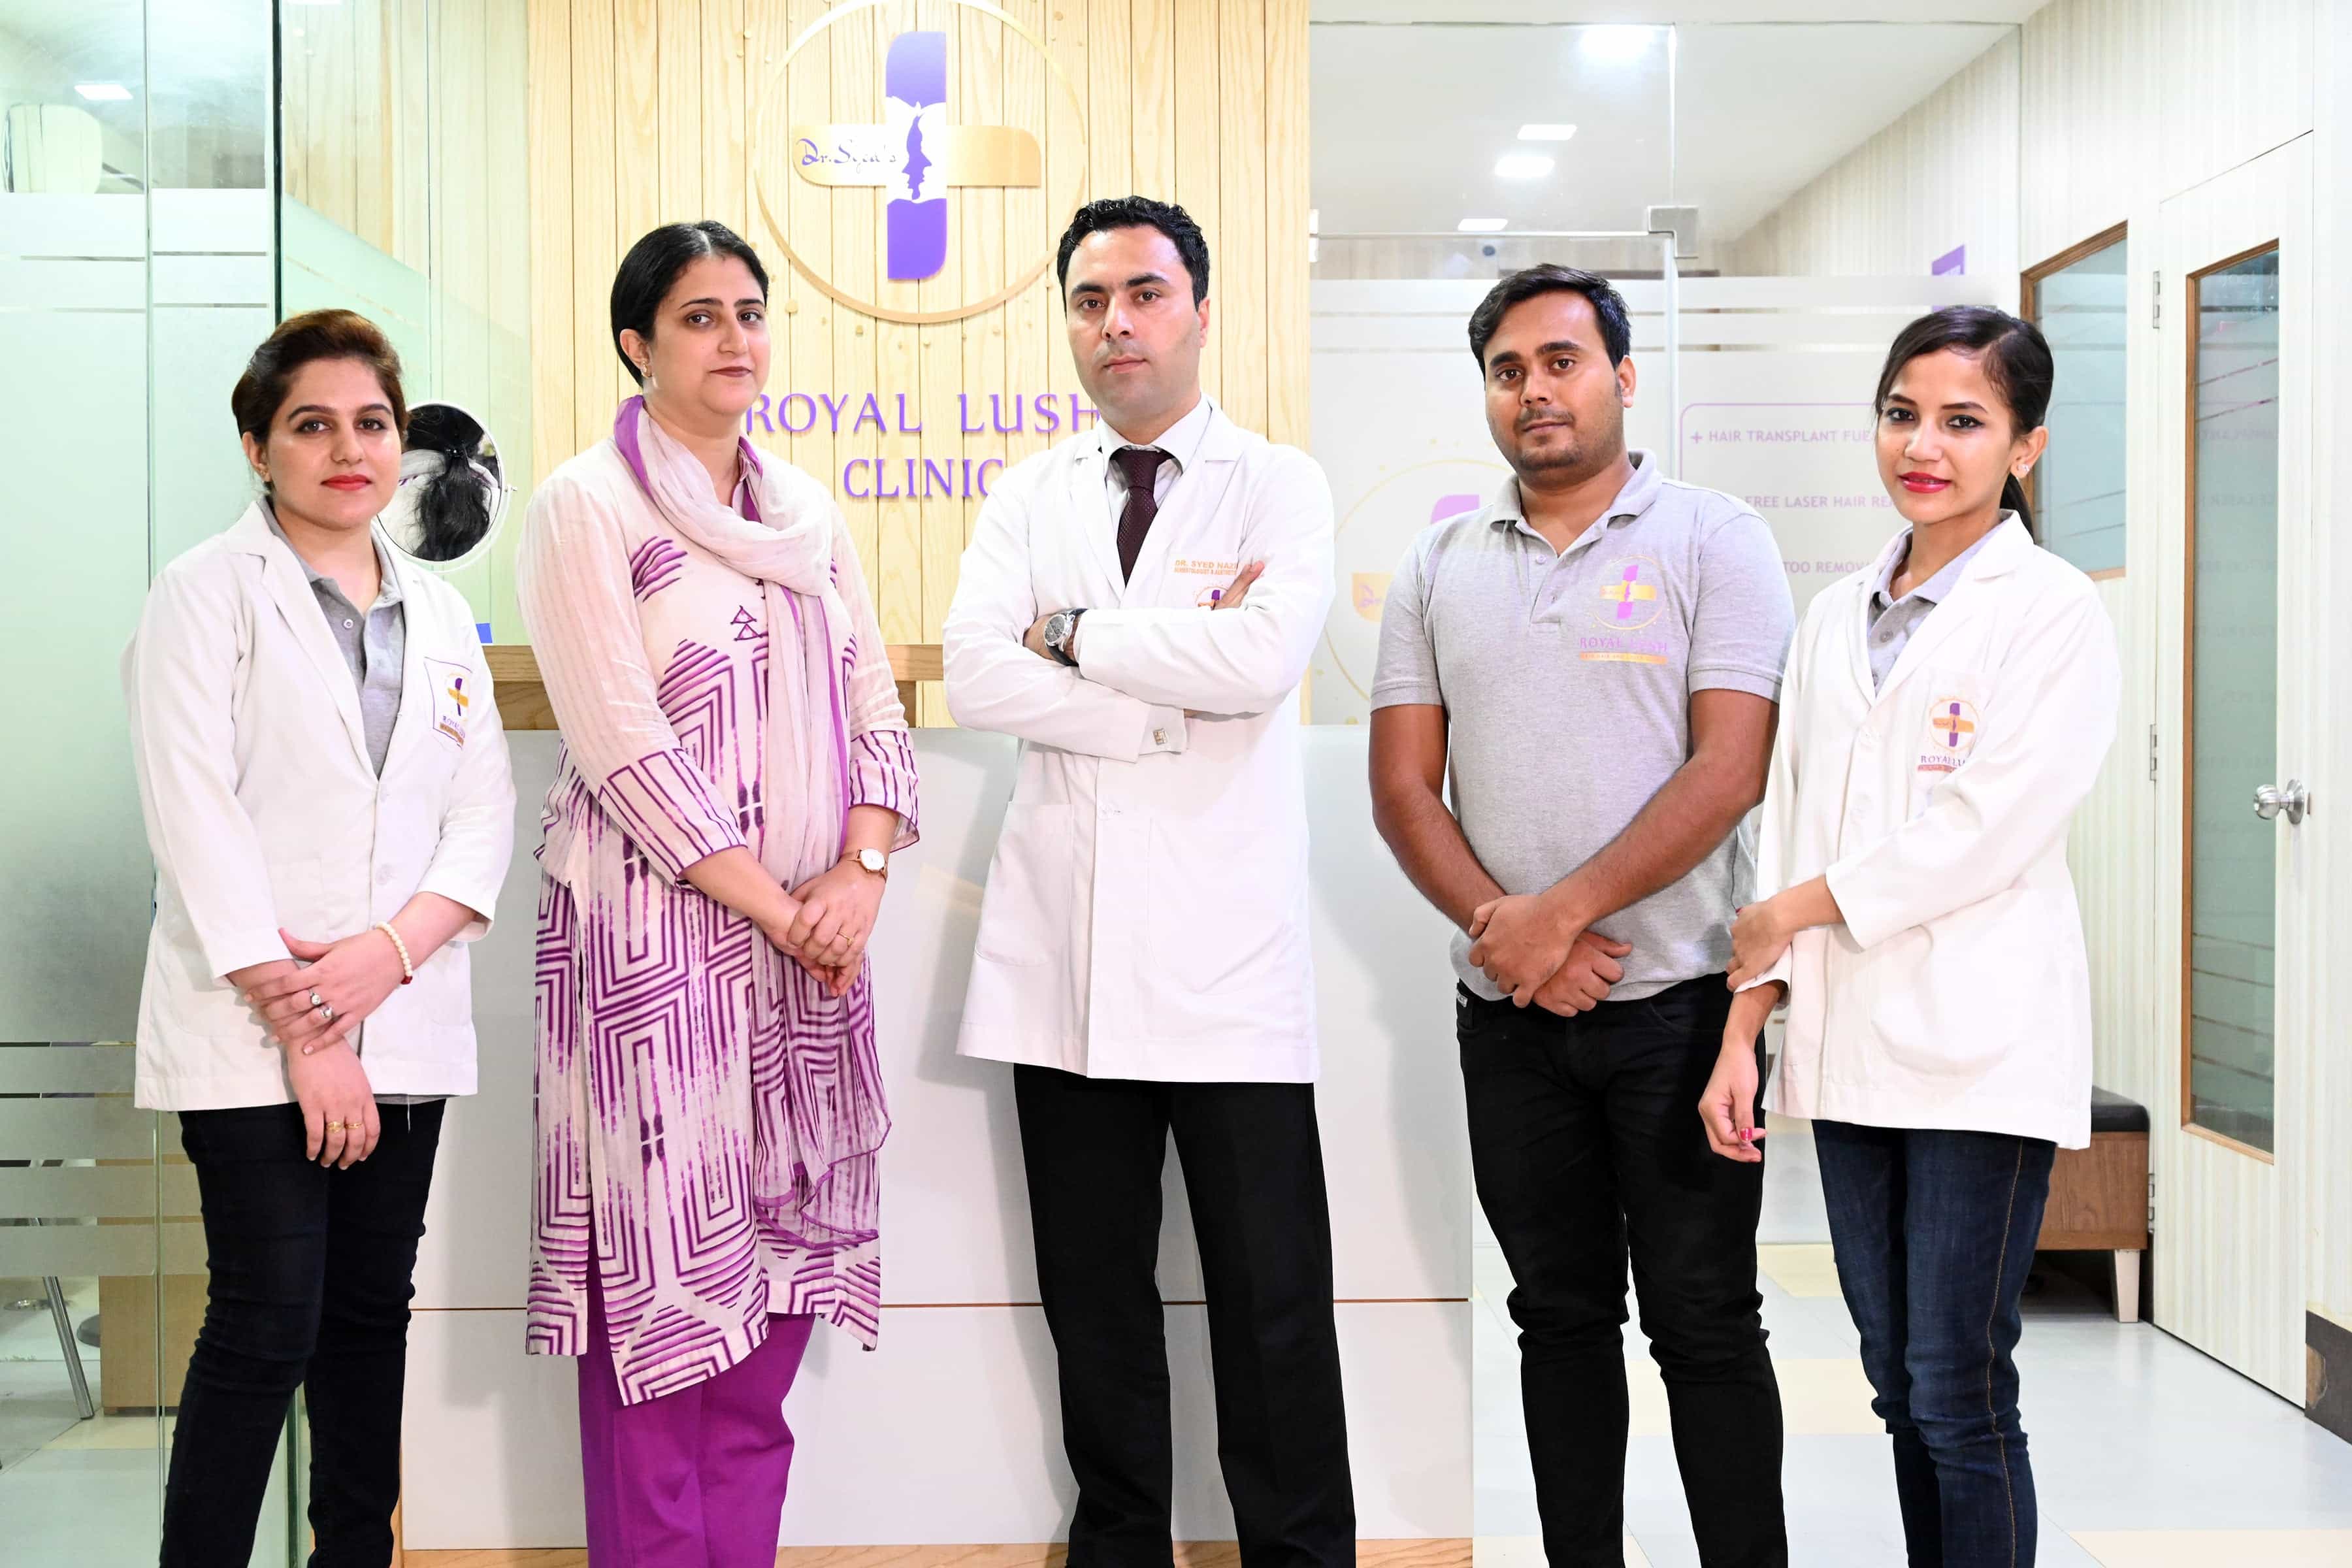 Dr. Syed's Royal Lush Clinic